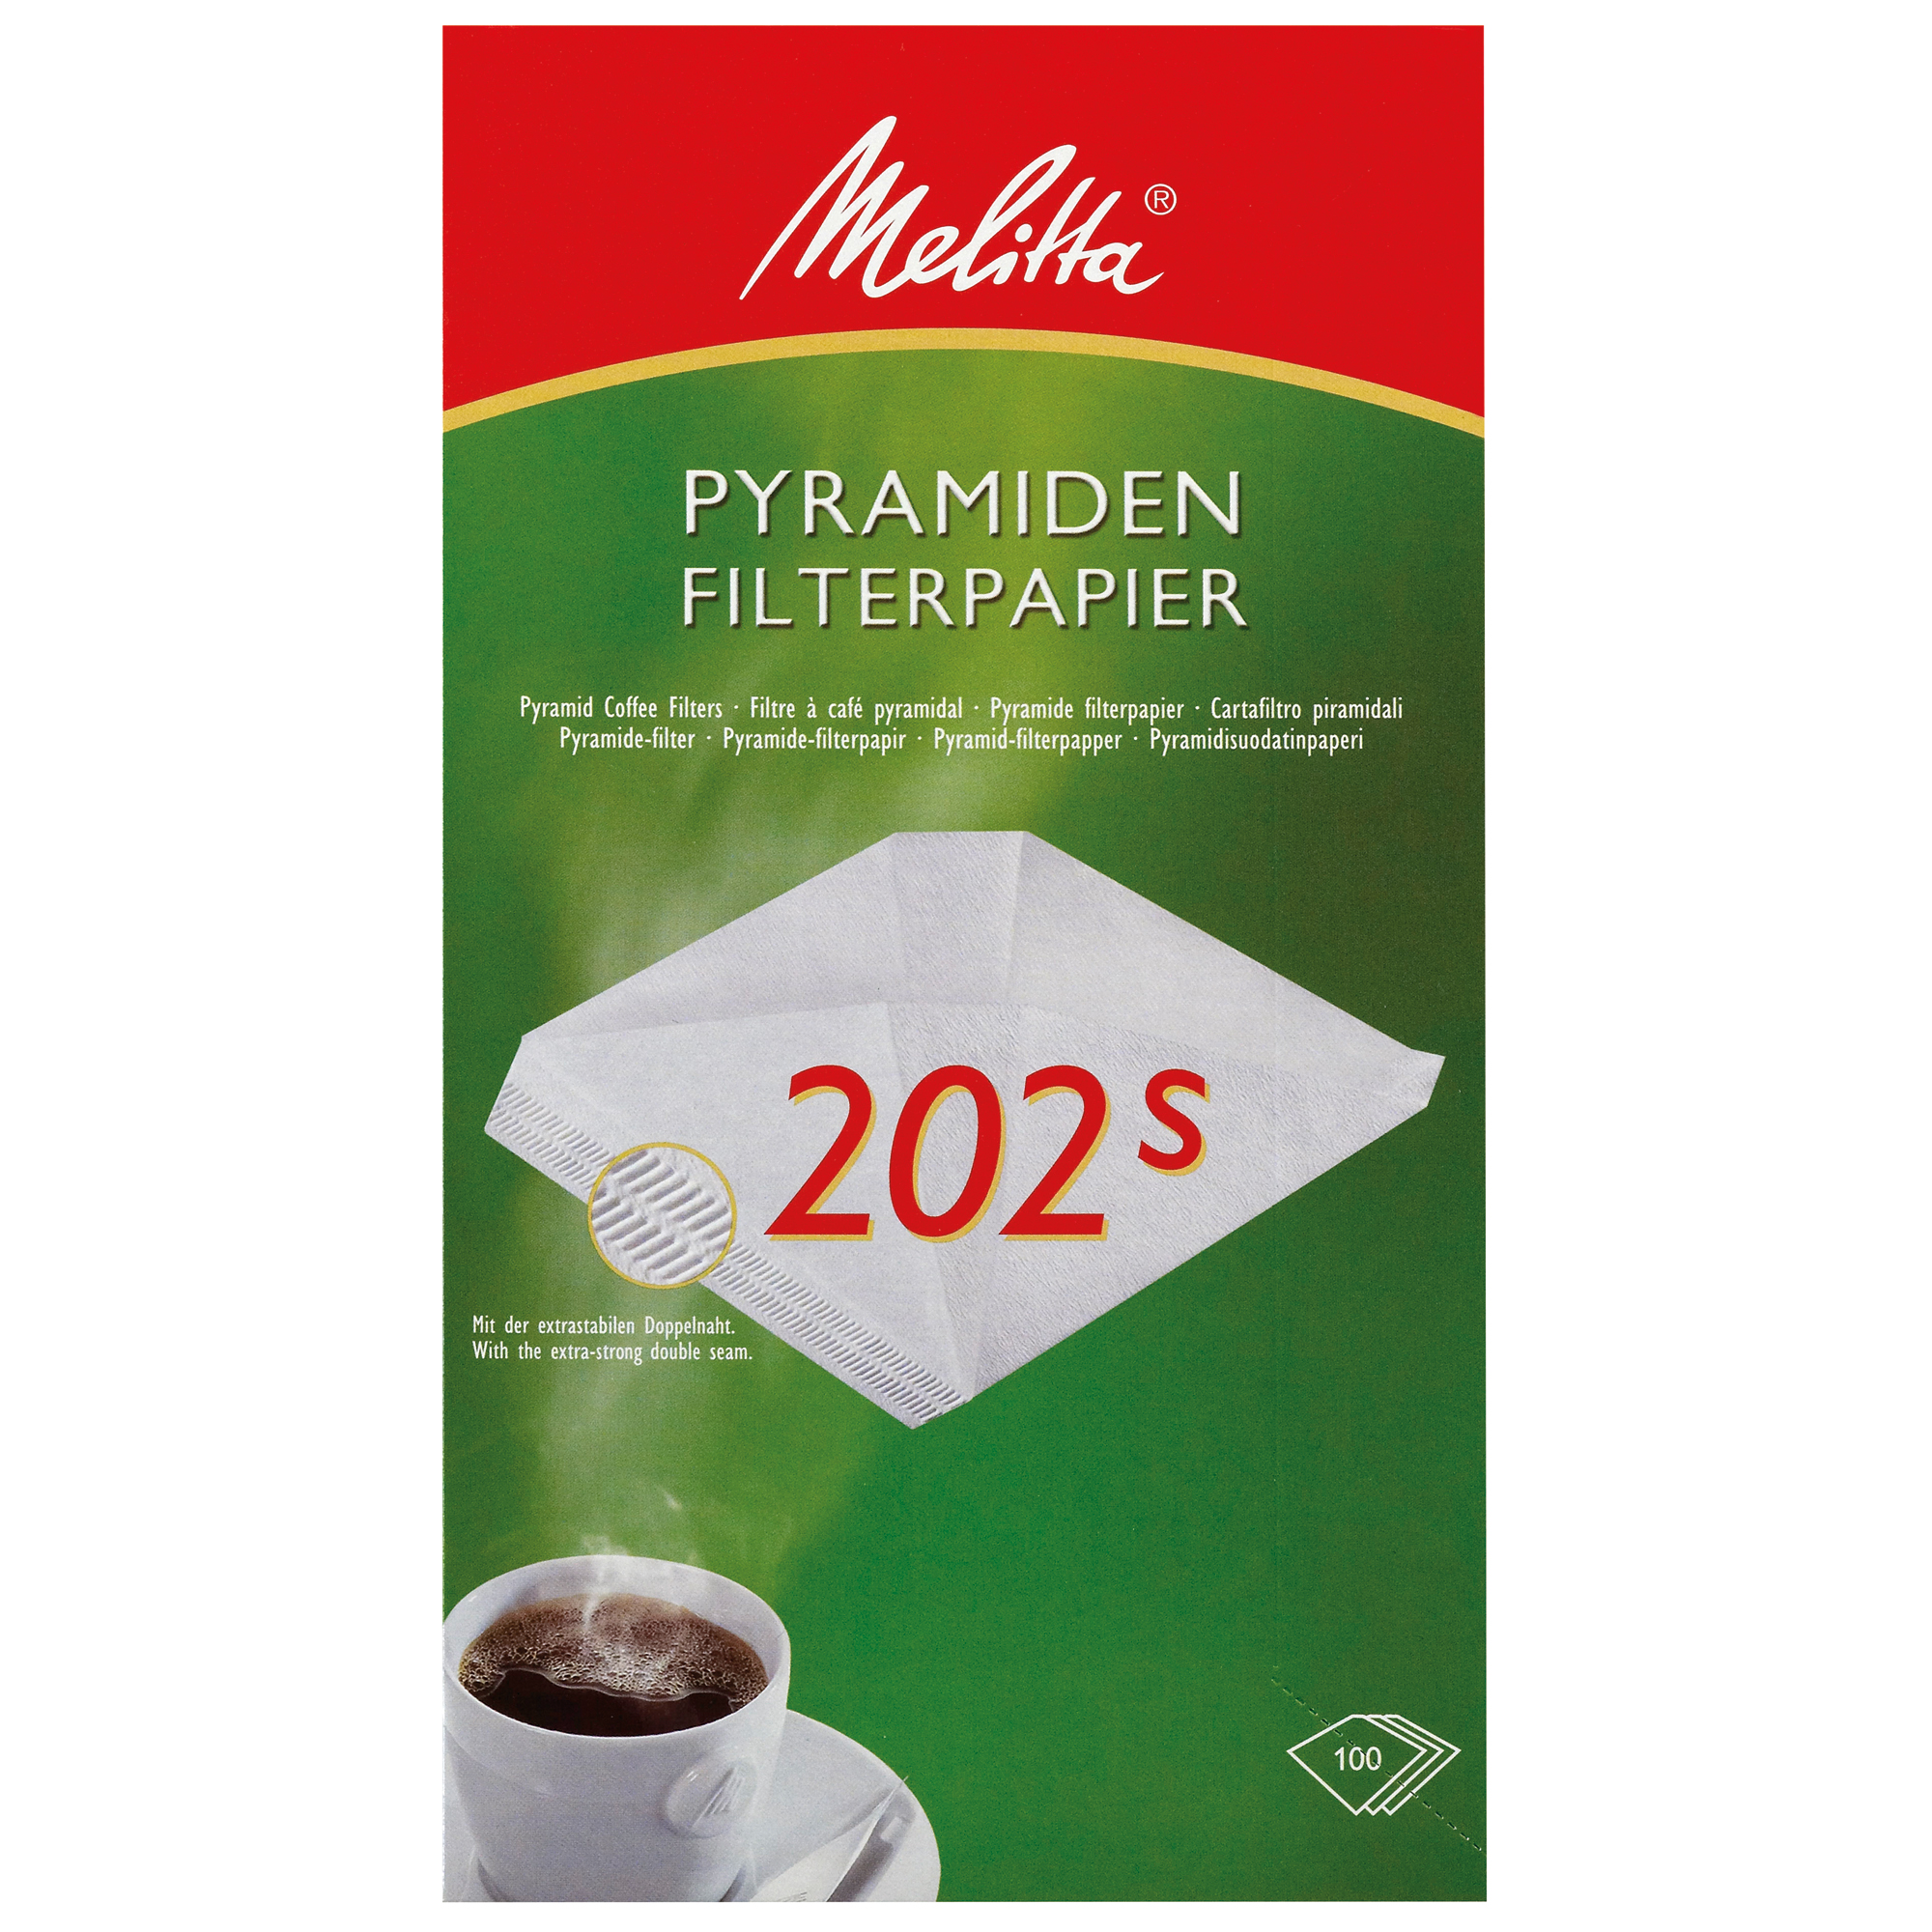 Melitta® Pyramidenfilter 202s